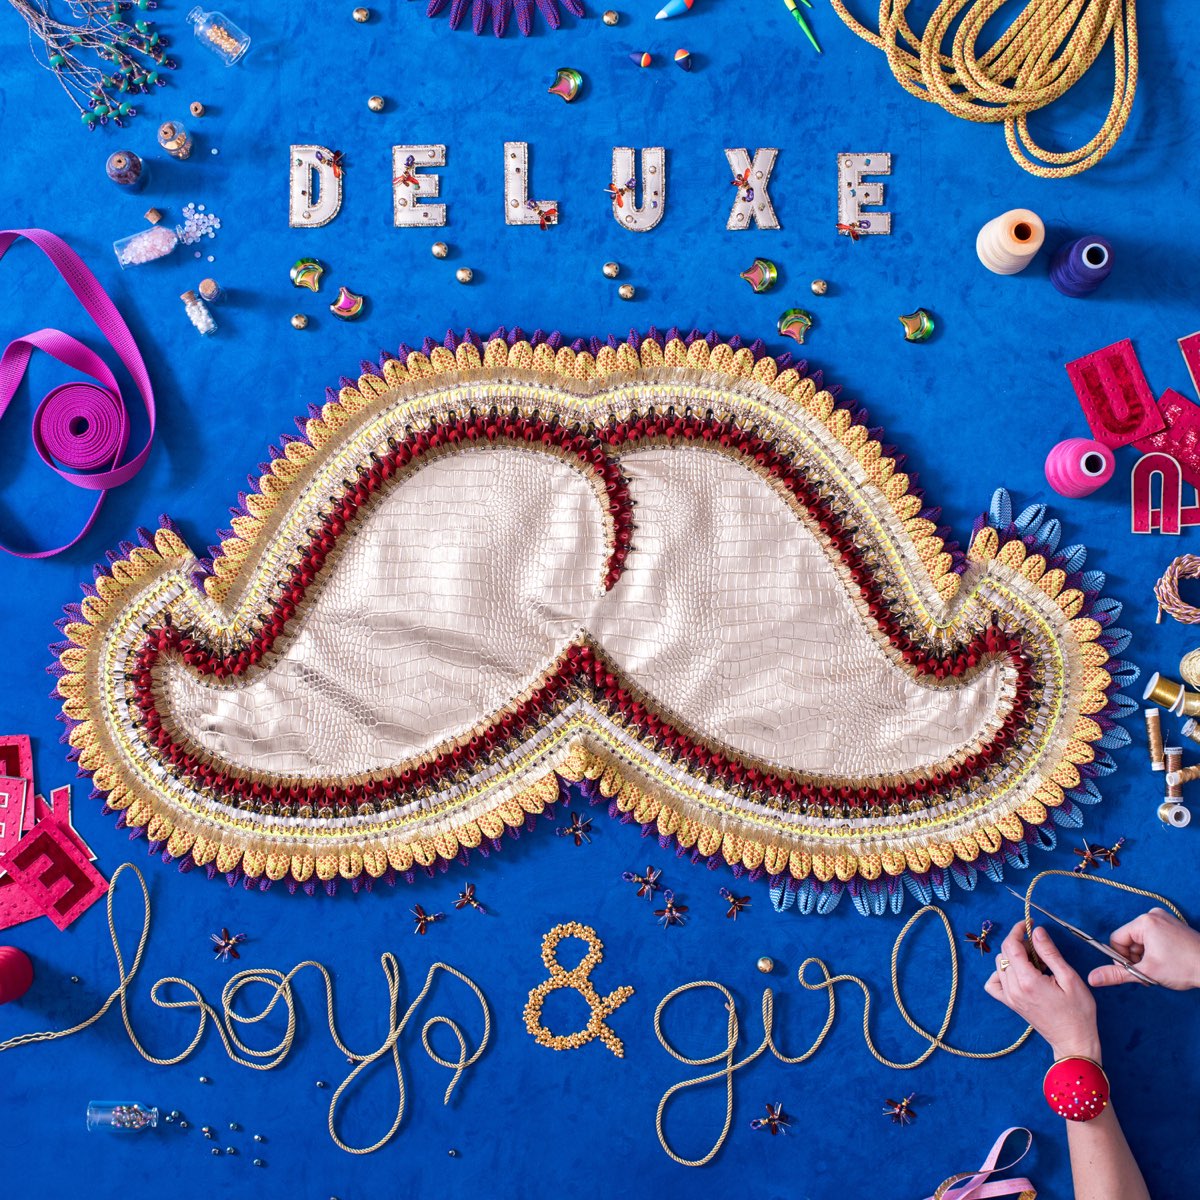 Boys & Girl - Album by Deluxe - Apple Music